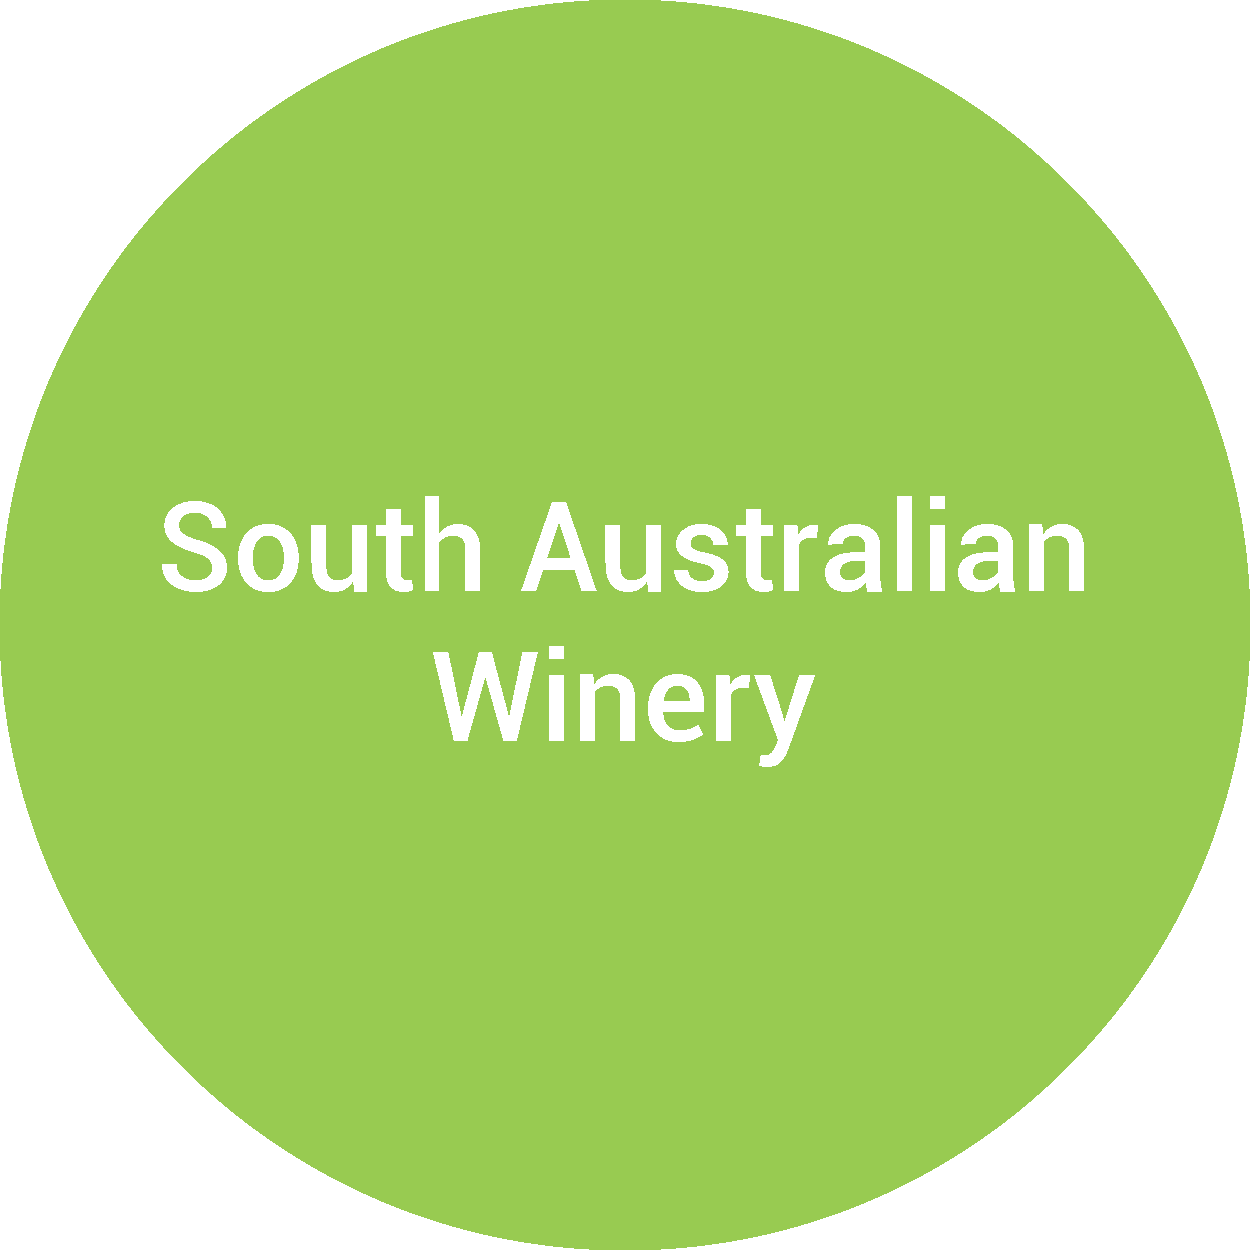 South Australian Winery